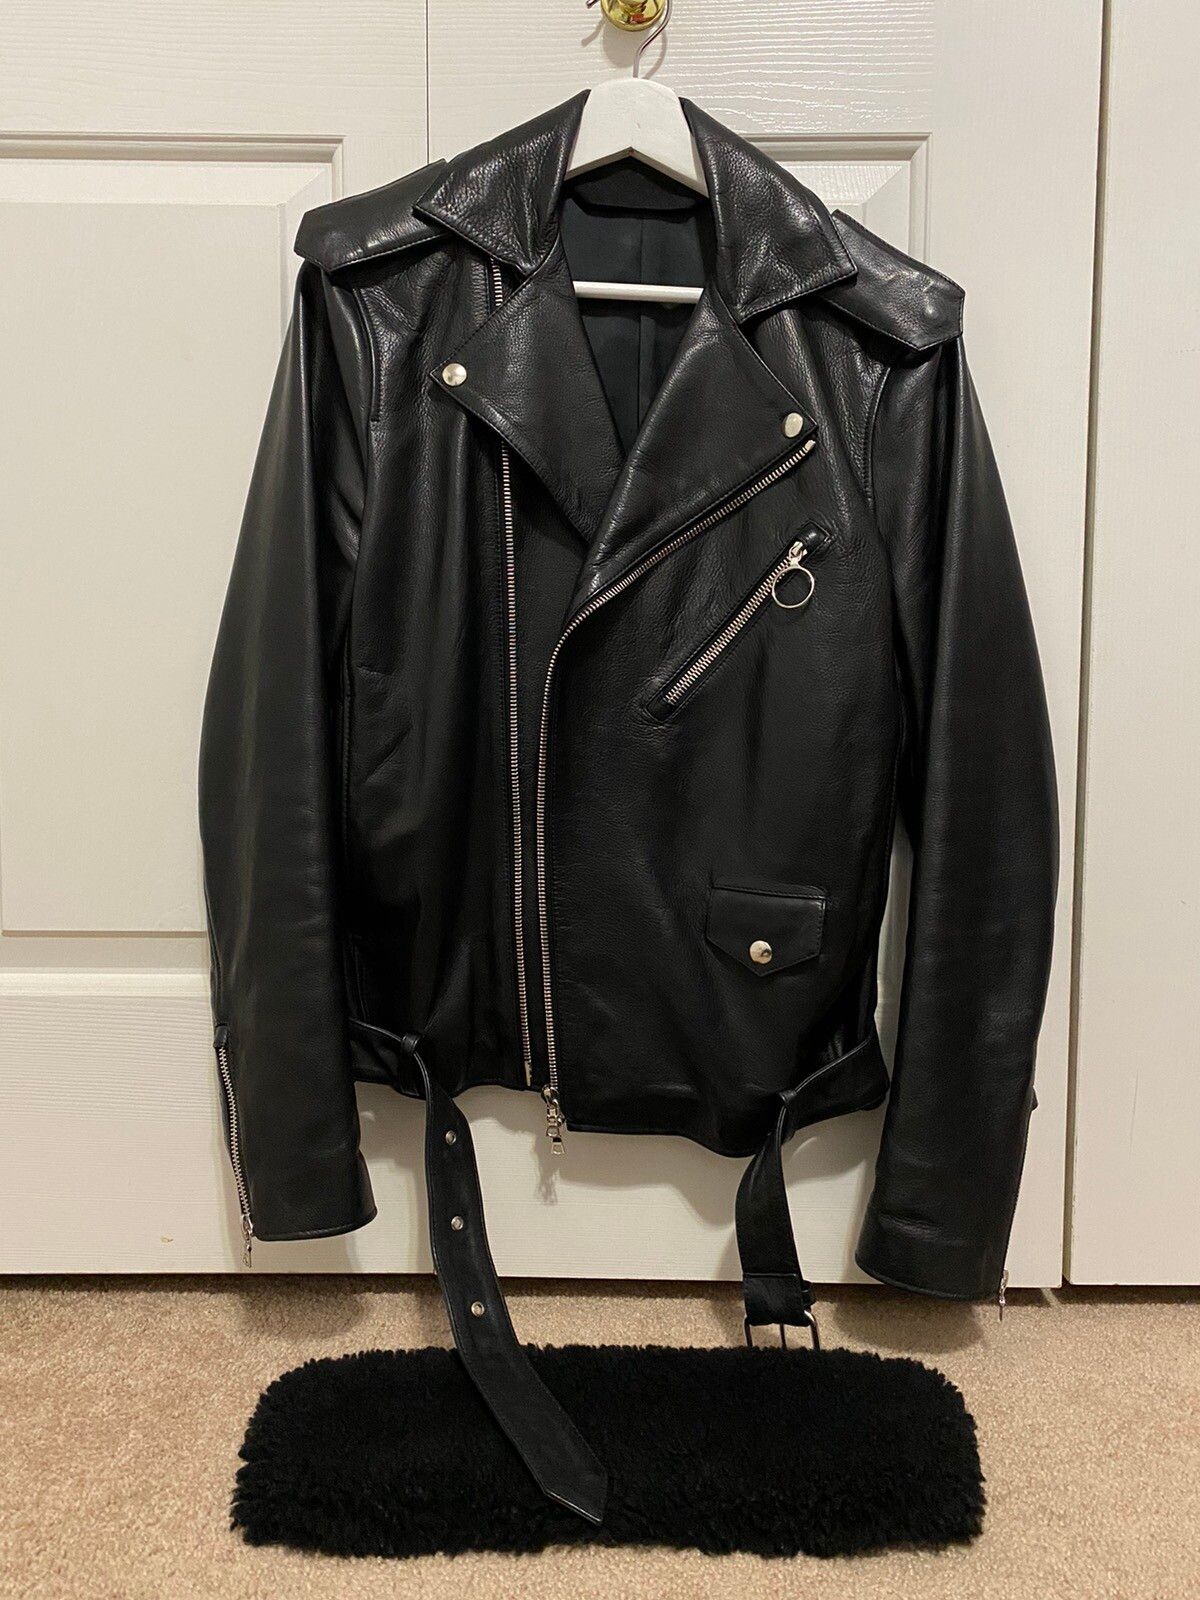 Acne Studios Araki Leather Jacket | Grailed